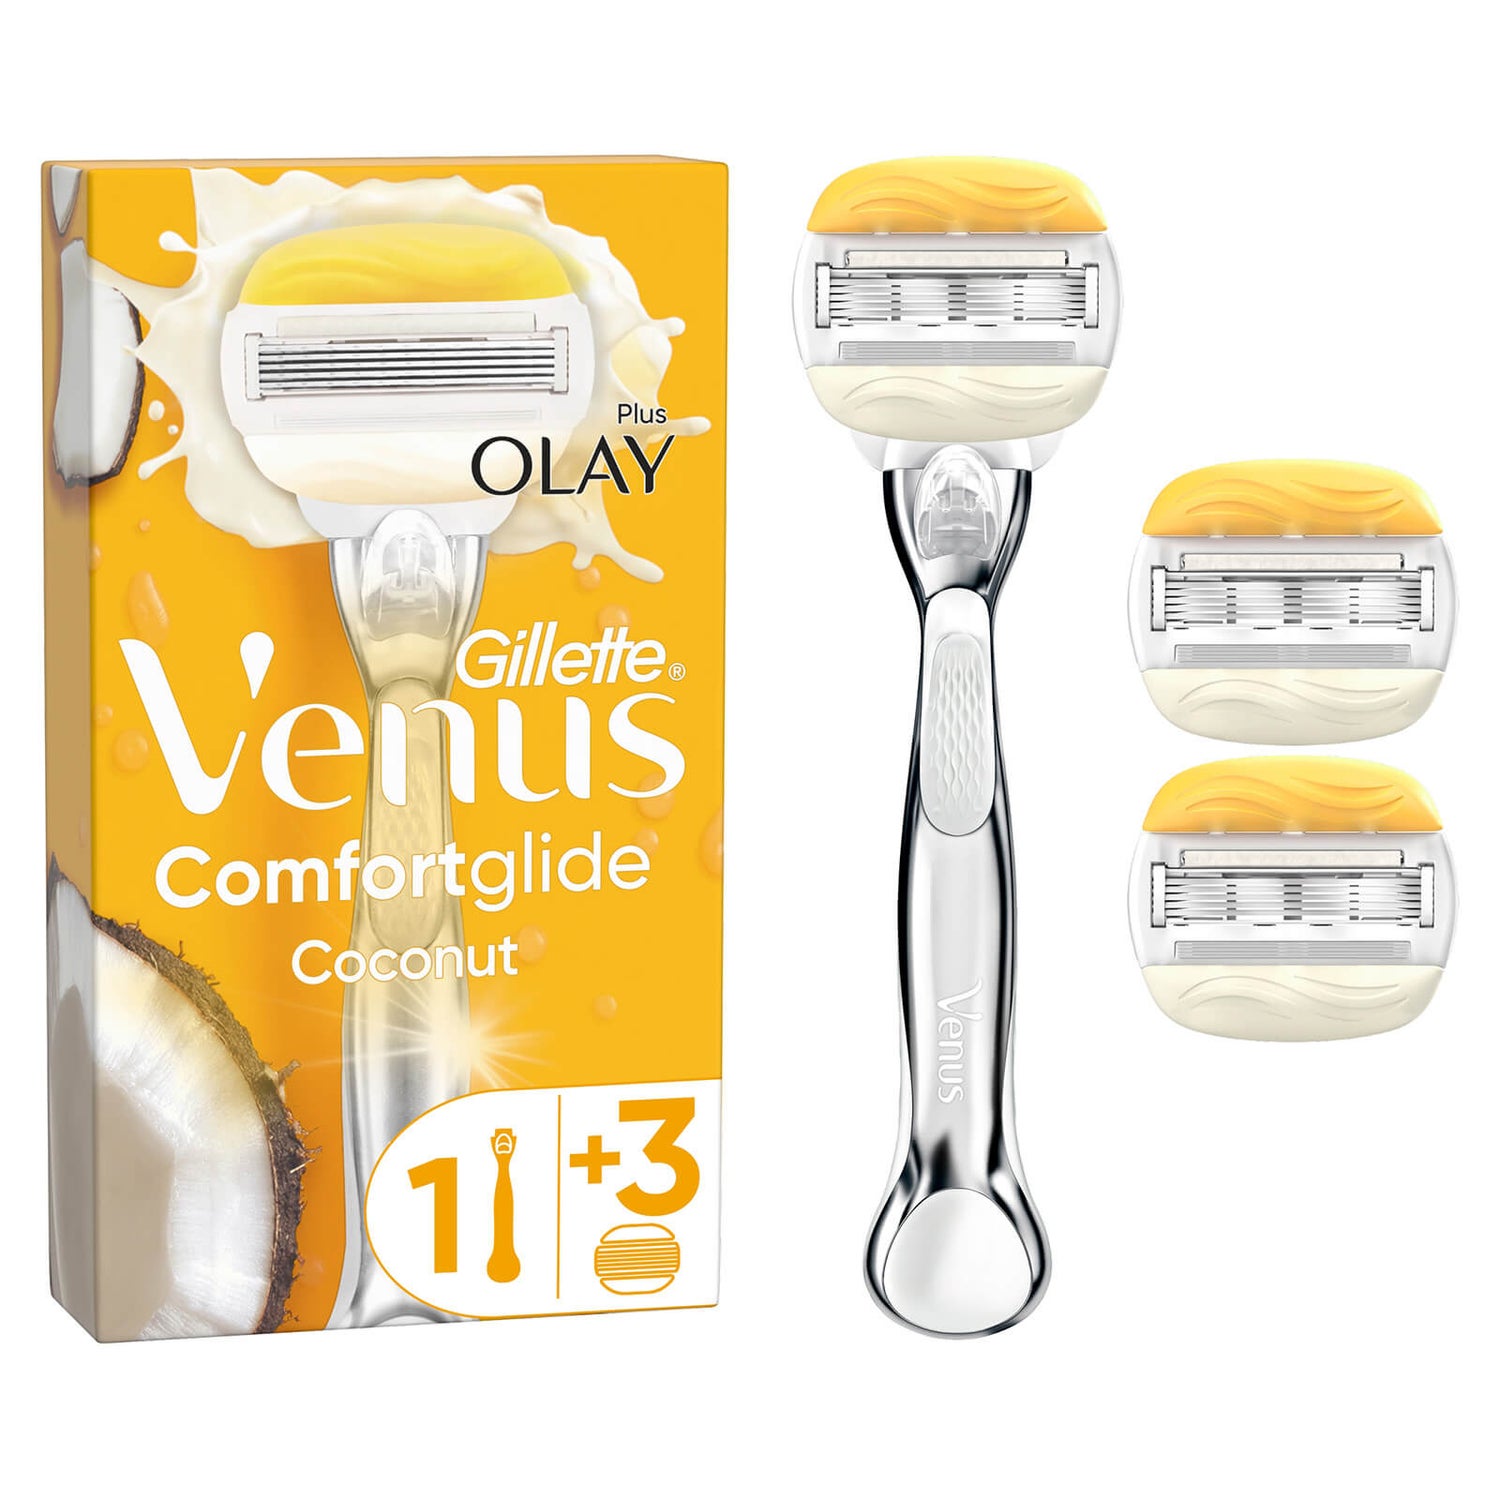 Venus ComfortGlide Coconut with Olay Platinum Razor Starter Pack